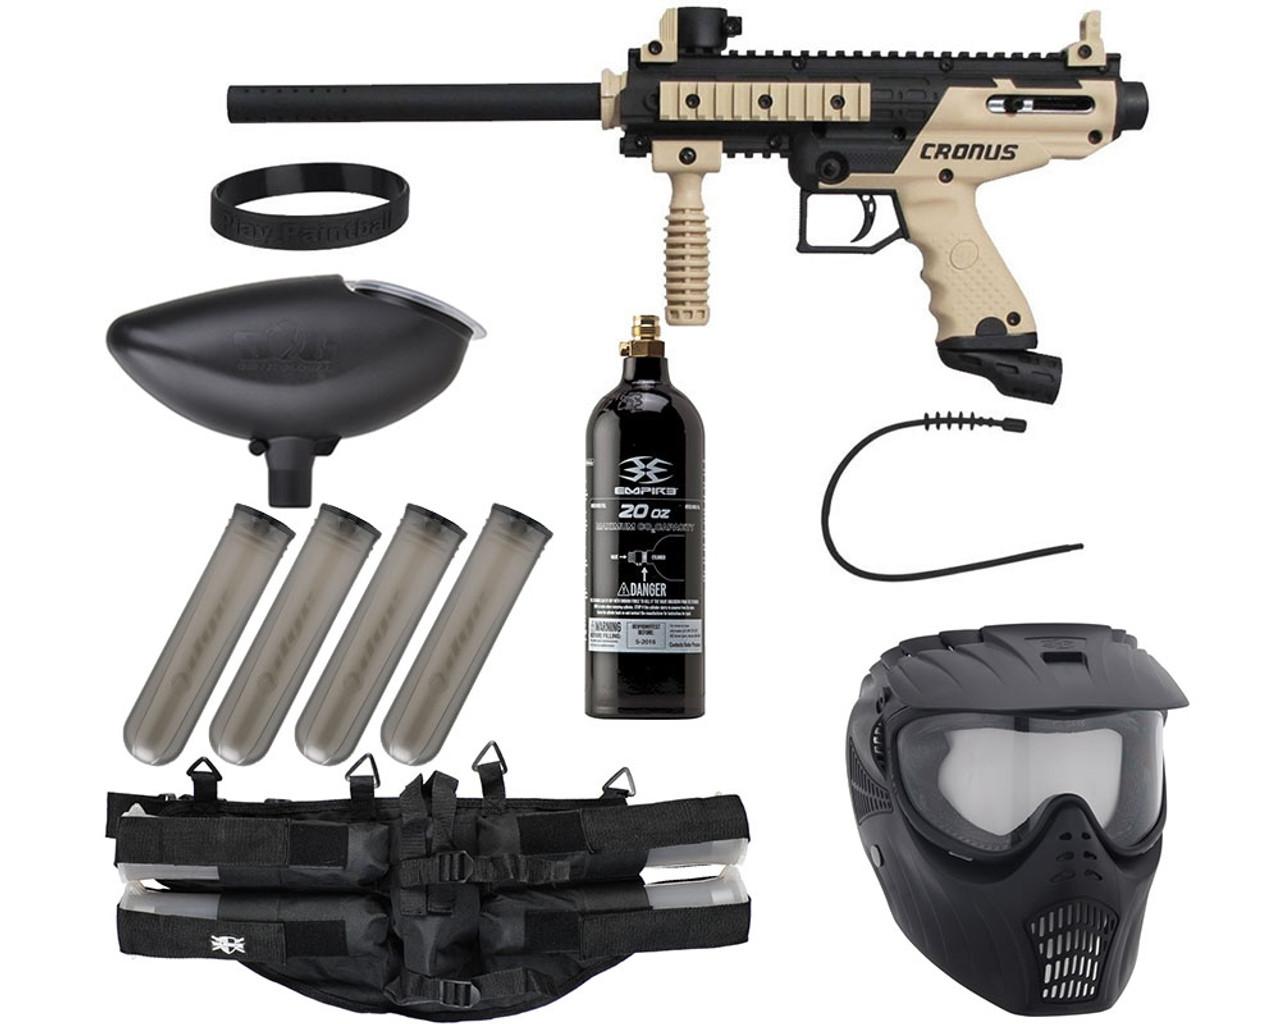 12-Pc Paint Gun Cleaning Kit - TP Tools & Equipment